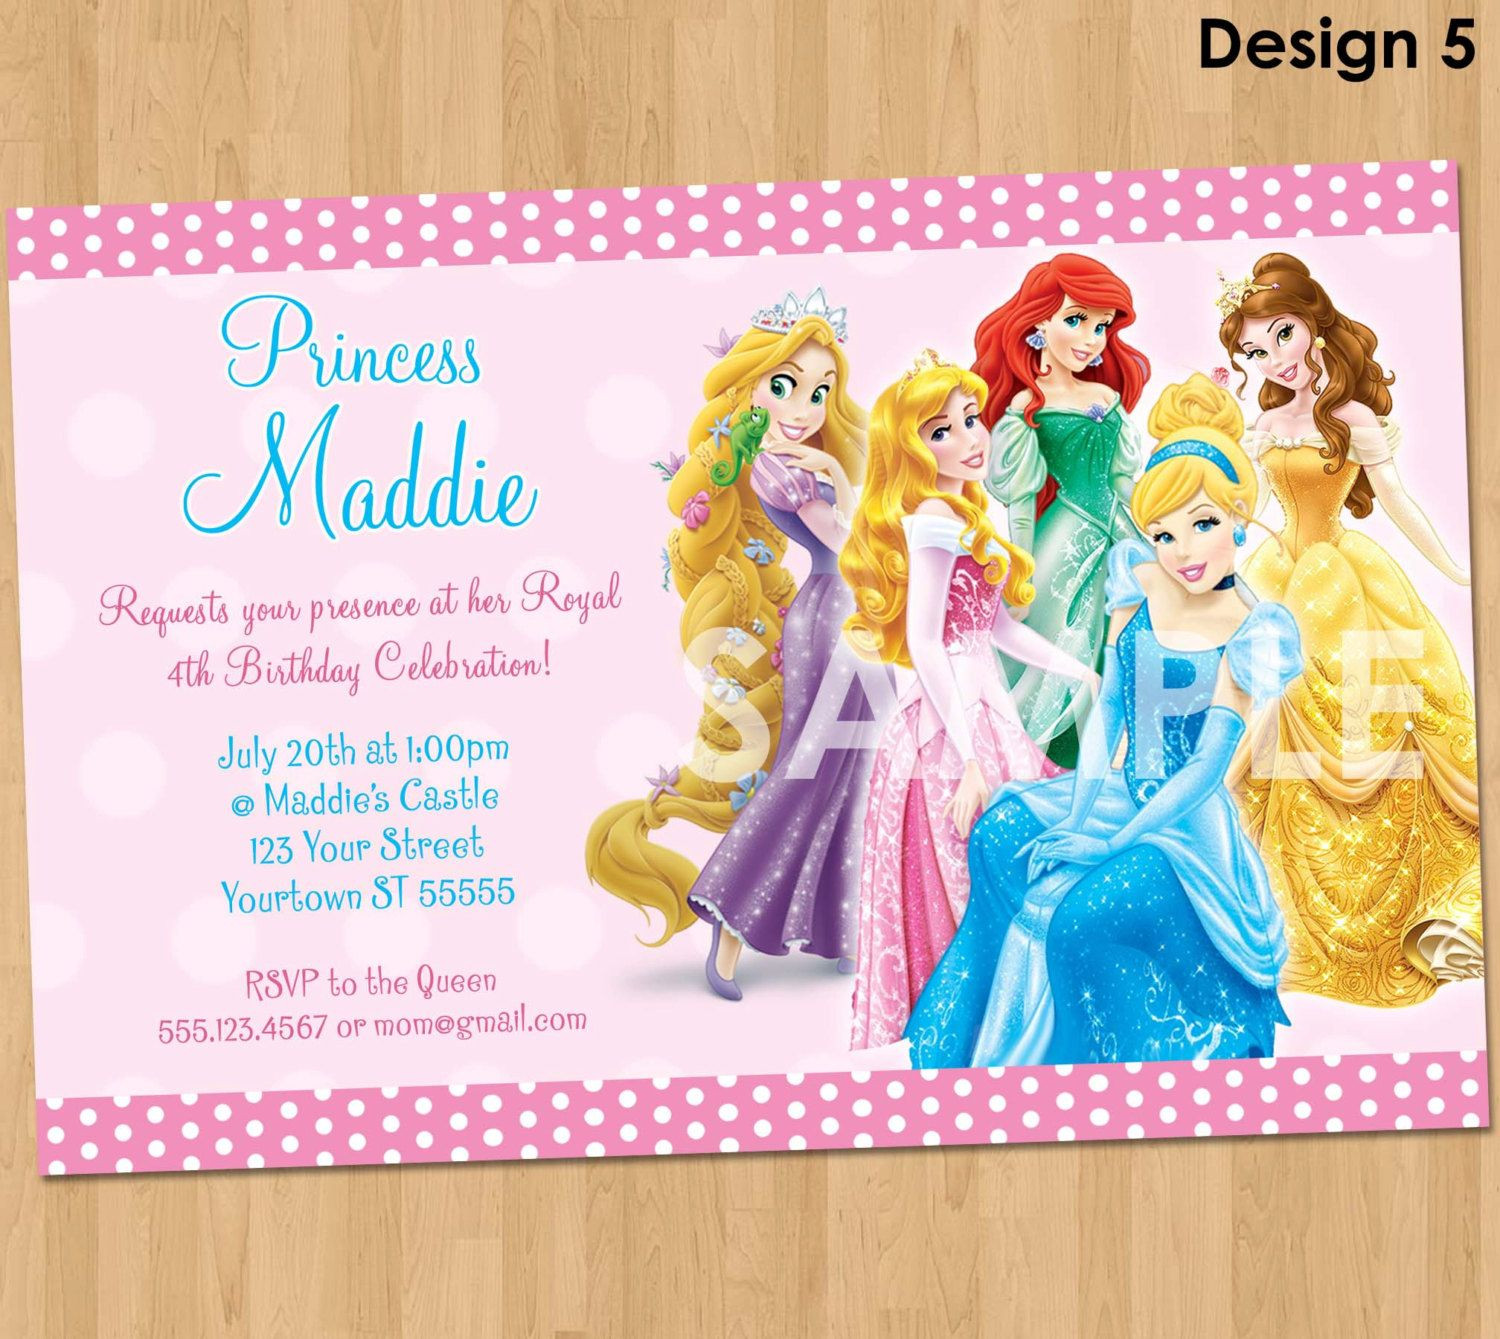 Disney Princess Birthday Party Invitations
 party invitations with all disney princesses including